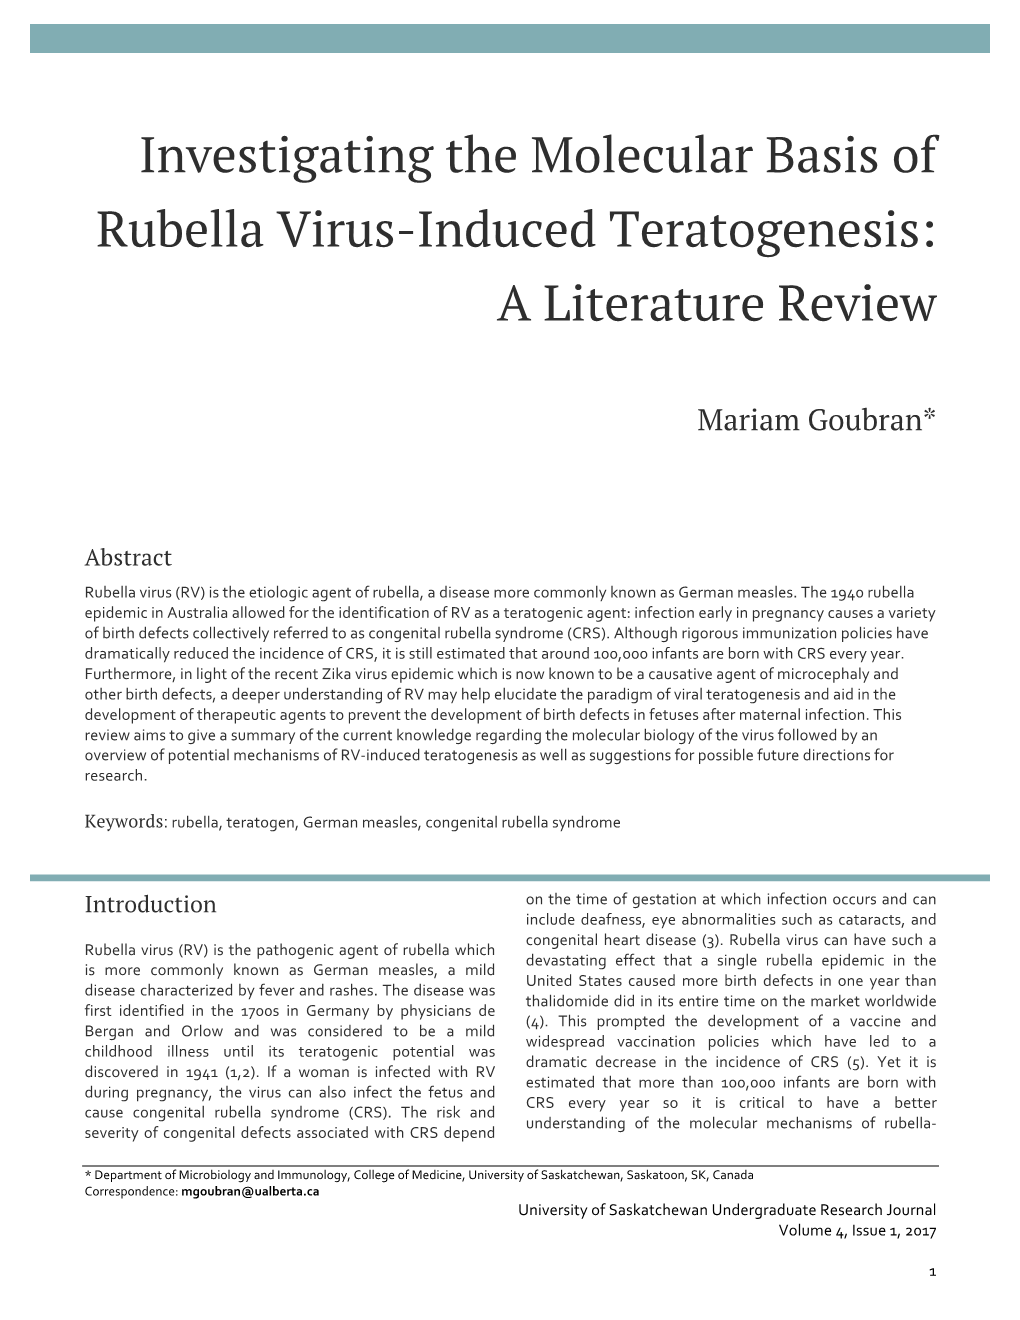 Investigating the Molecular Basis of Rubella Virus-Induced Teratogenesis: a Literature Review